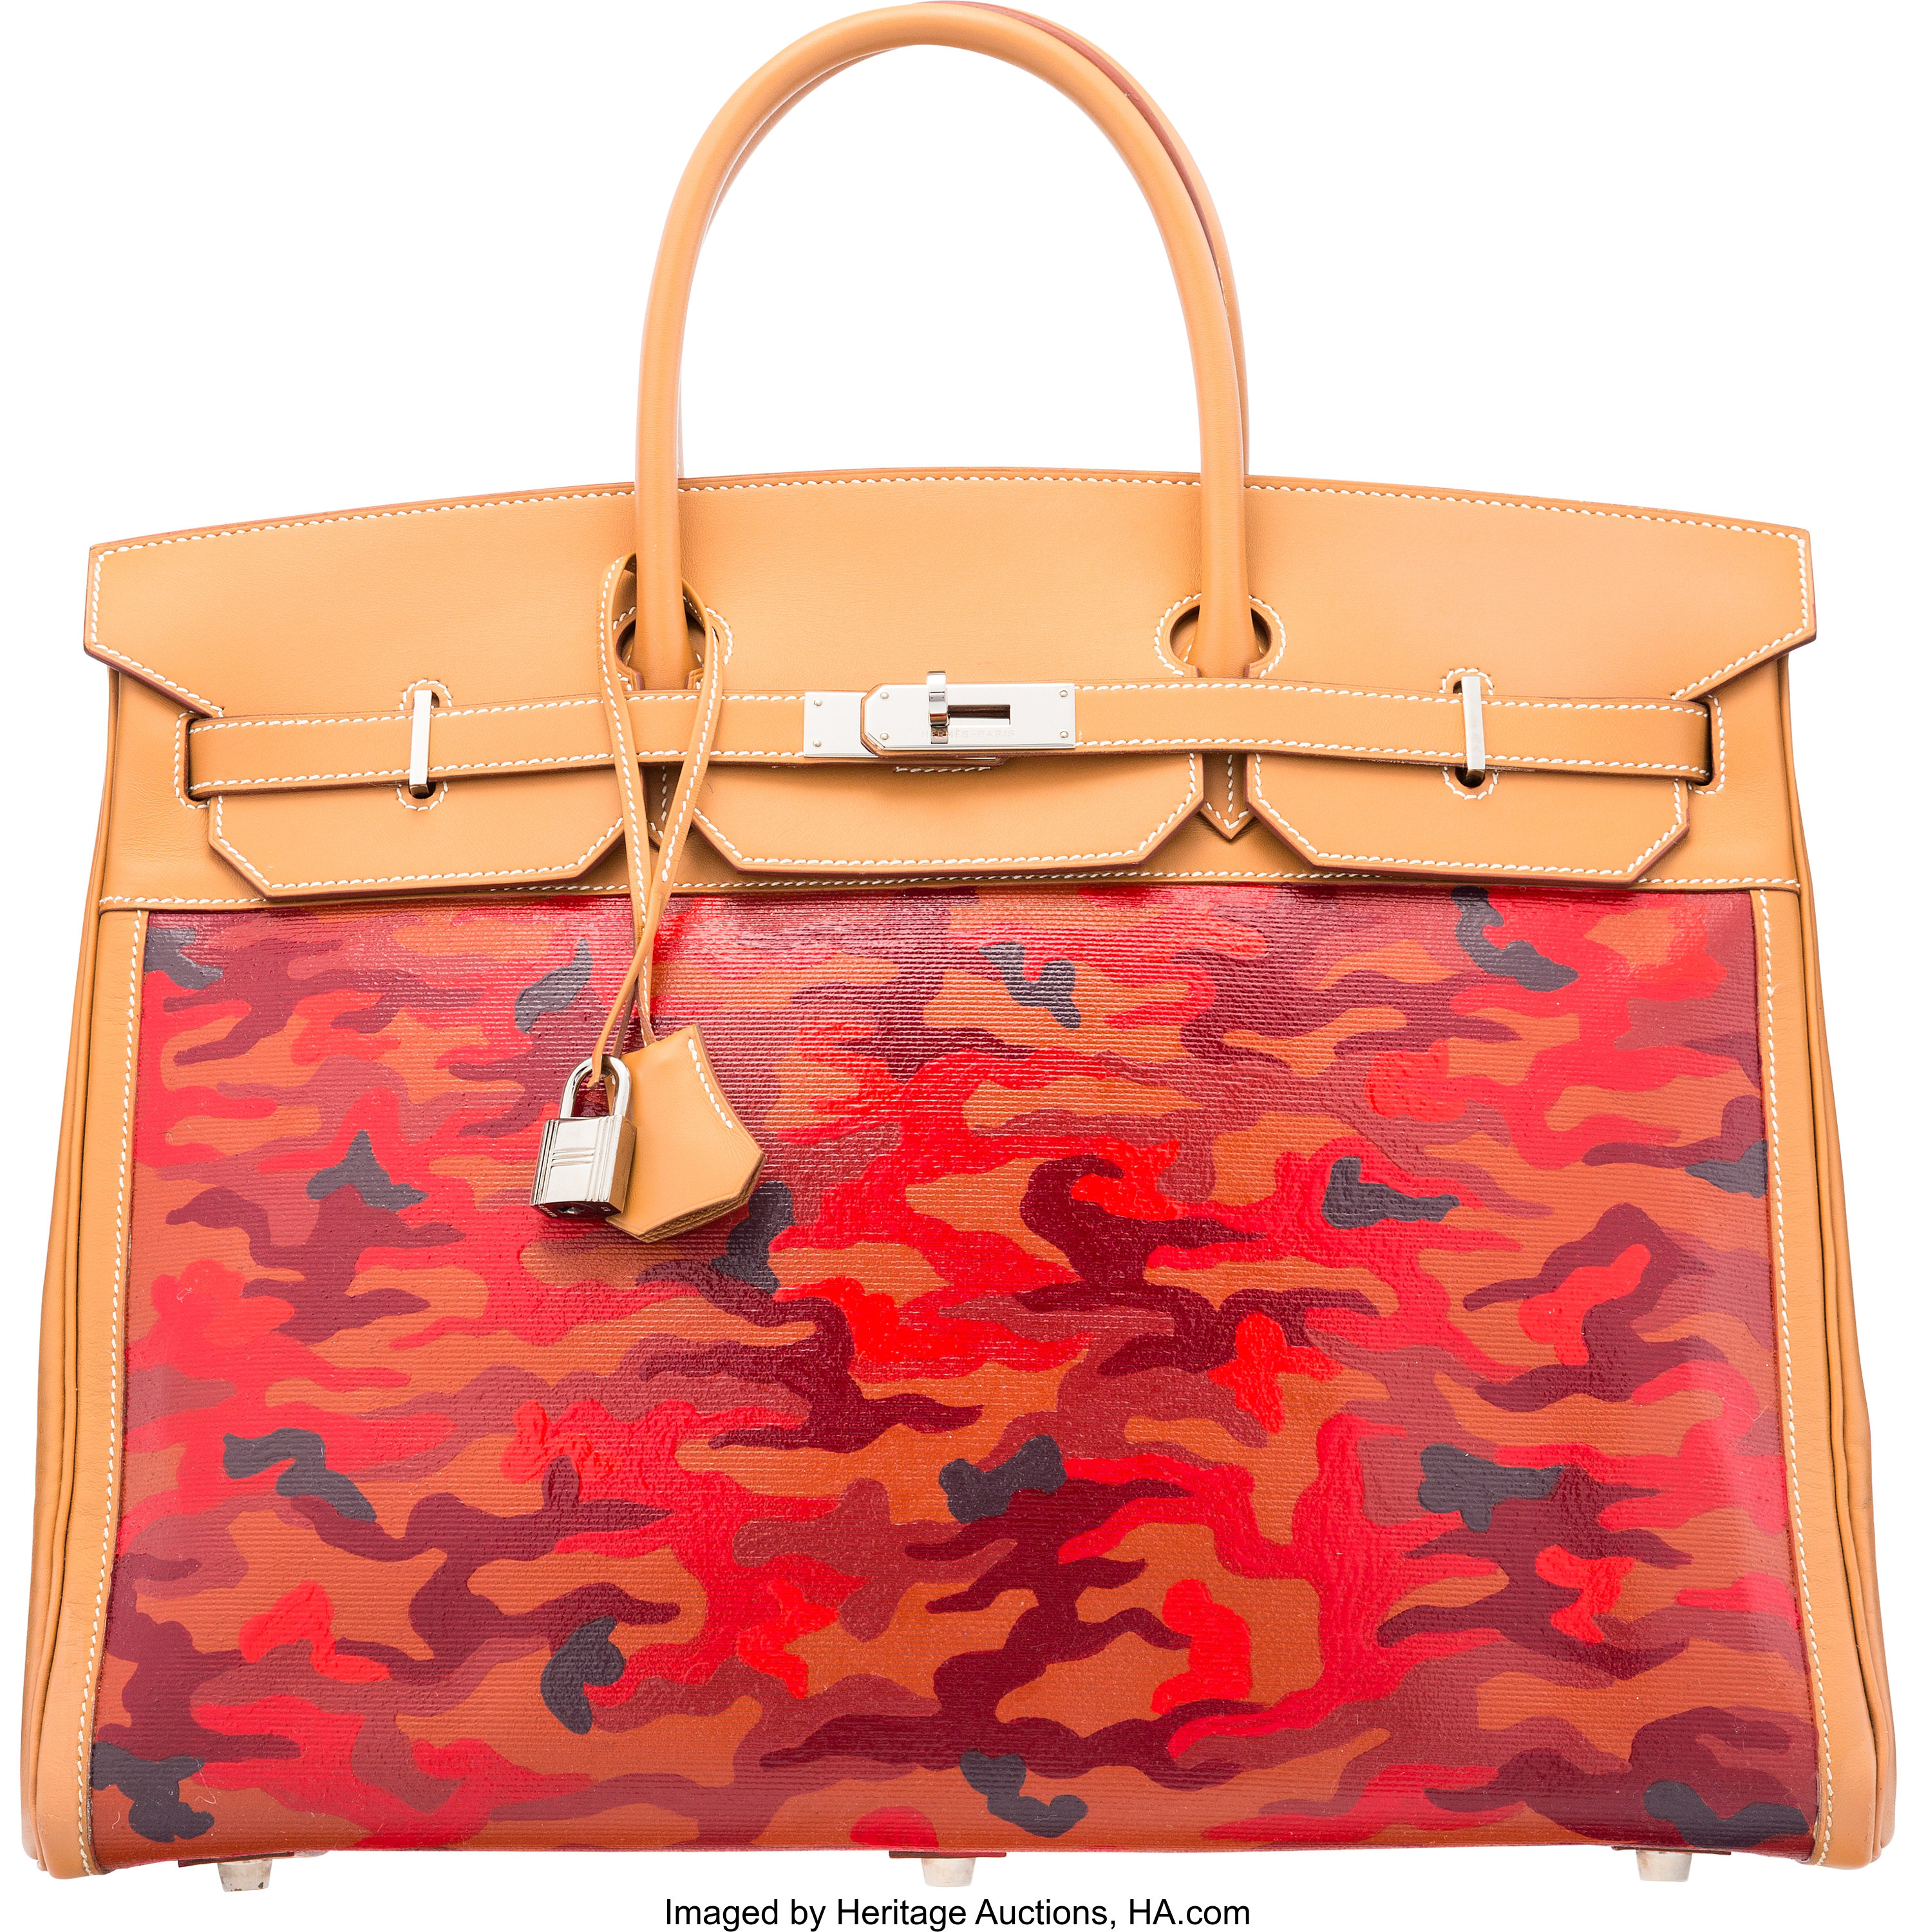 Used Brown Louis Vuitton Monogram Speedy 40cm Top Handle Bag Authentic  Houston,TX